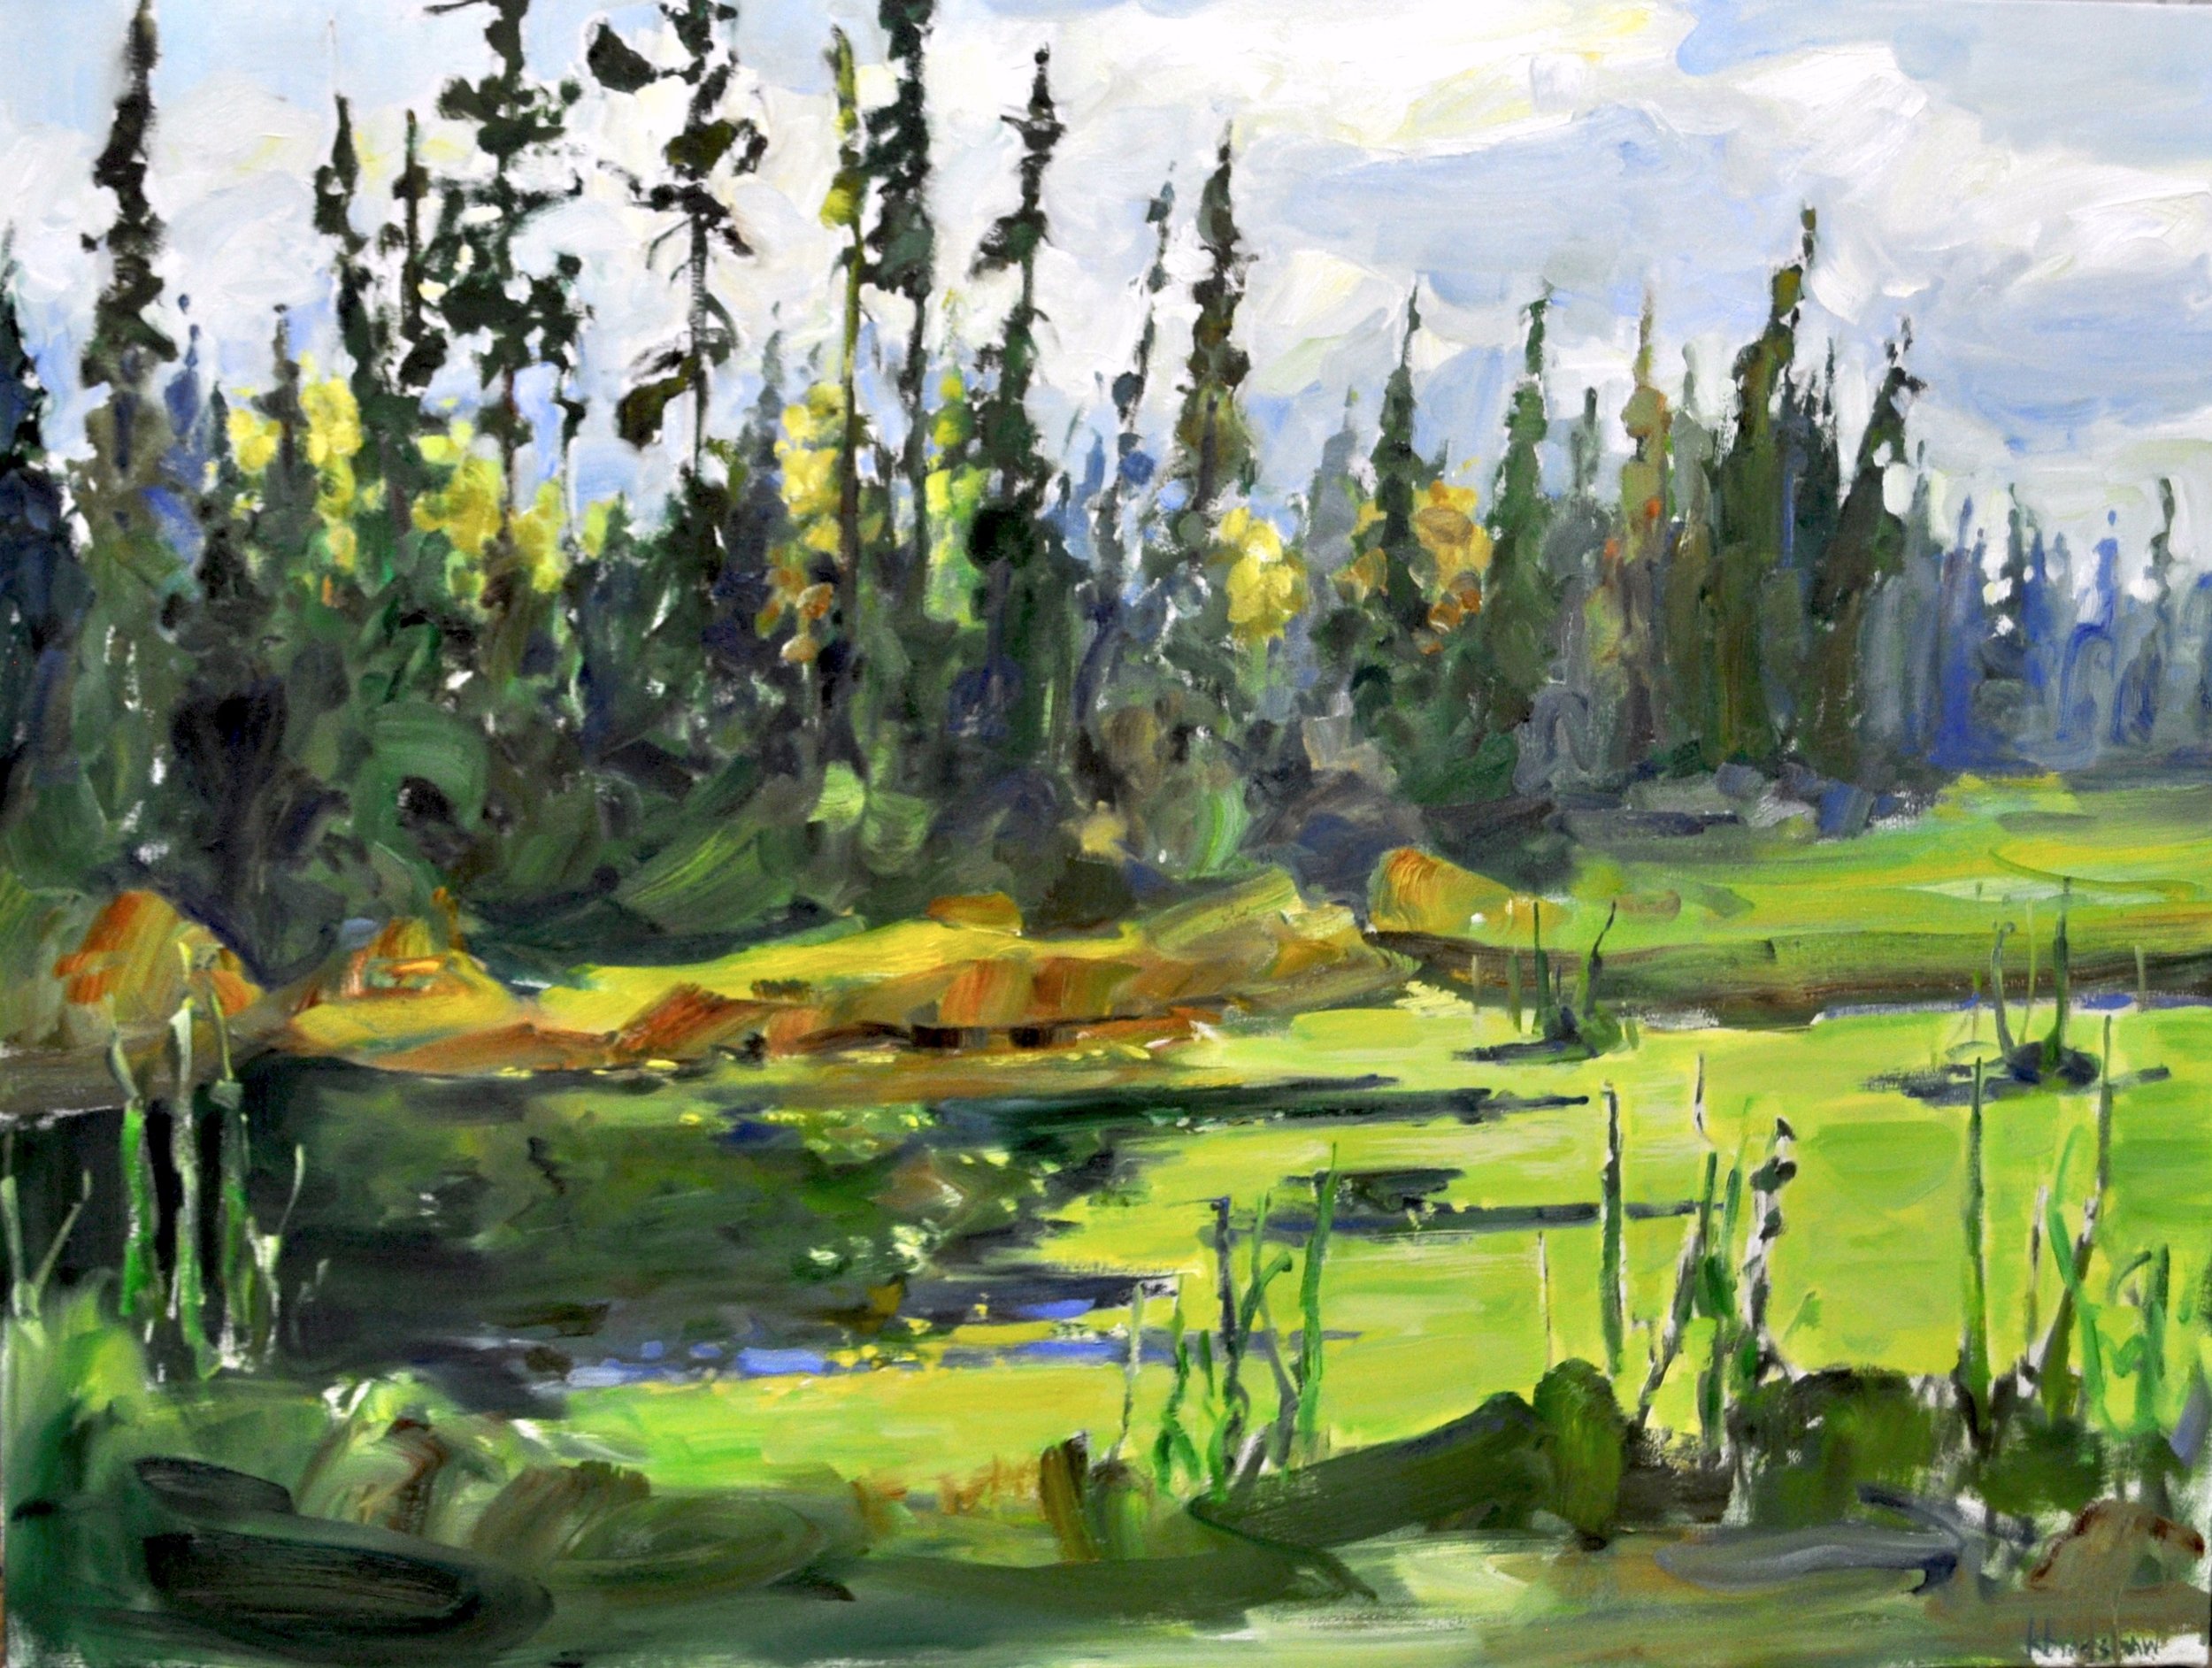 "Green Pond at Elkridge"